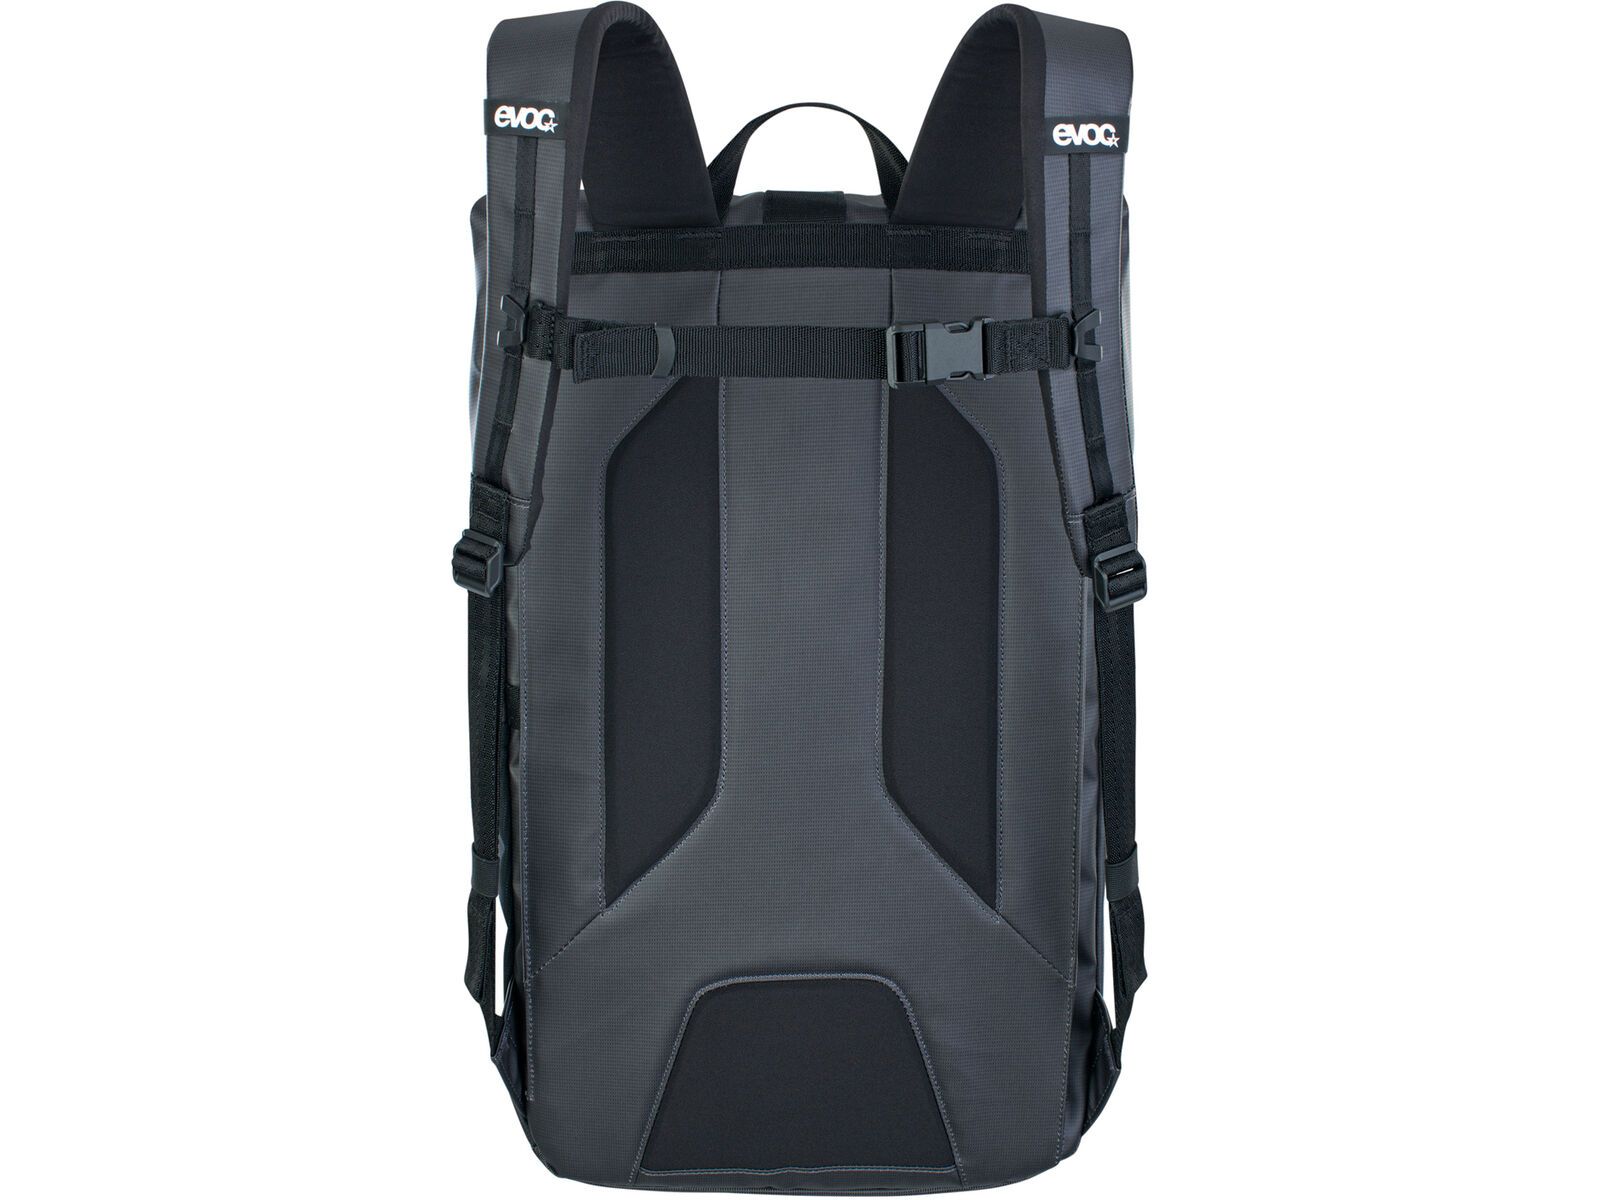 Evoc Duffle Backpack 26, carbon grey/black | Bild 7